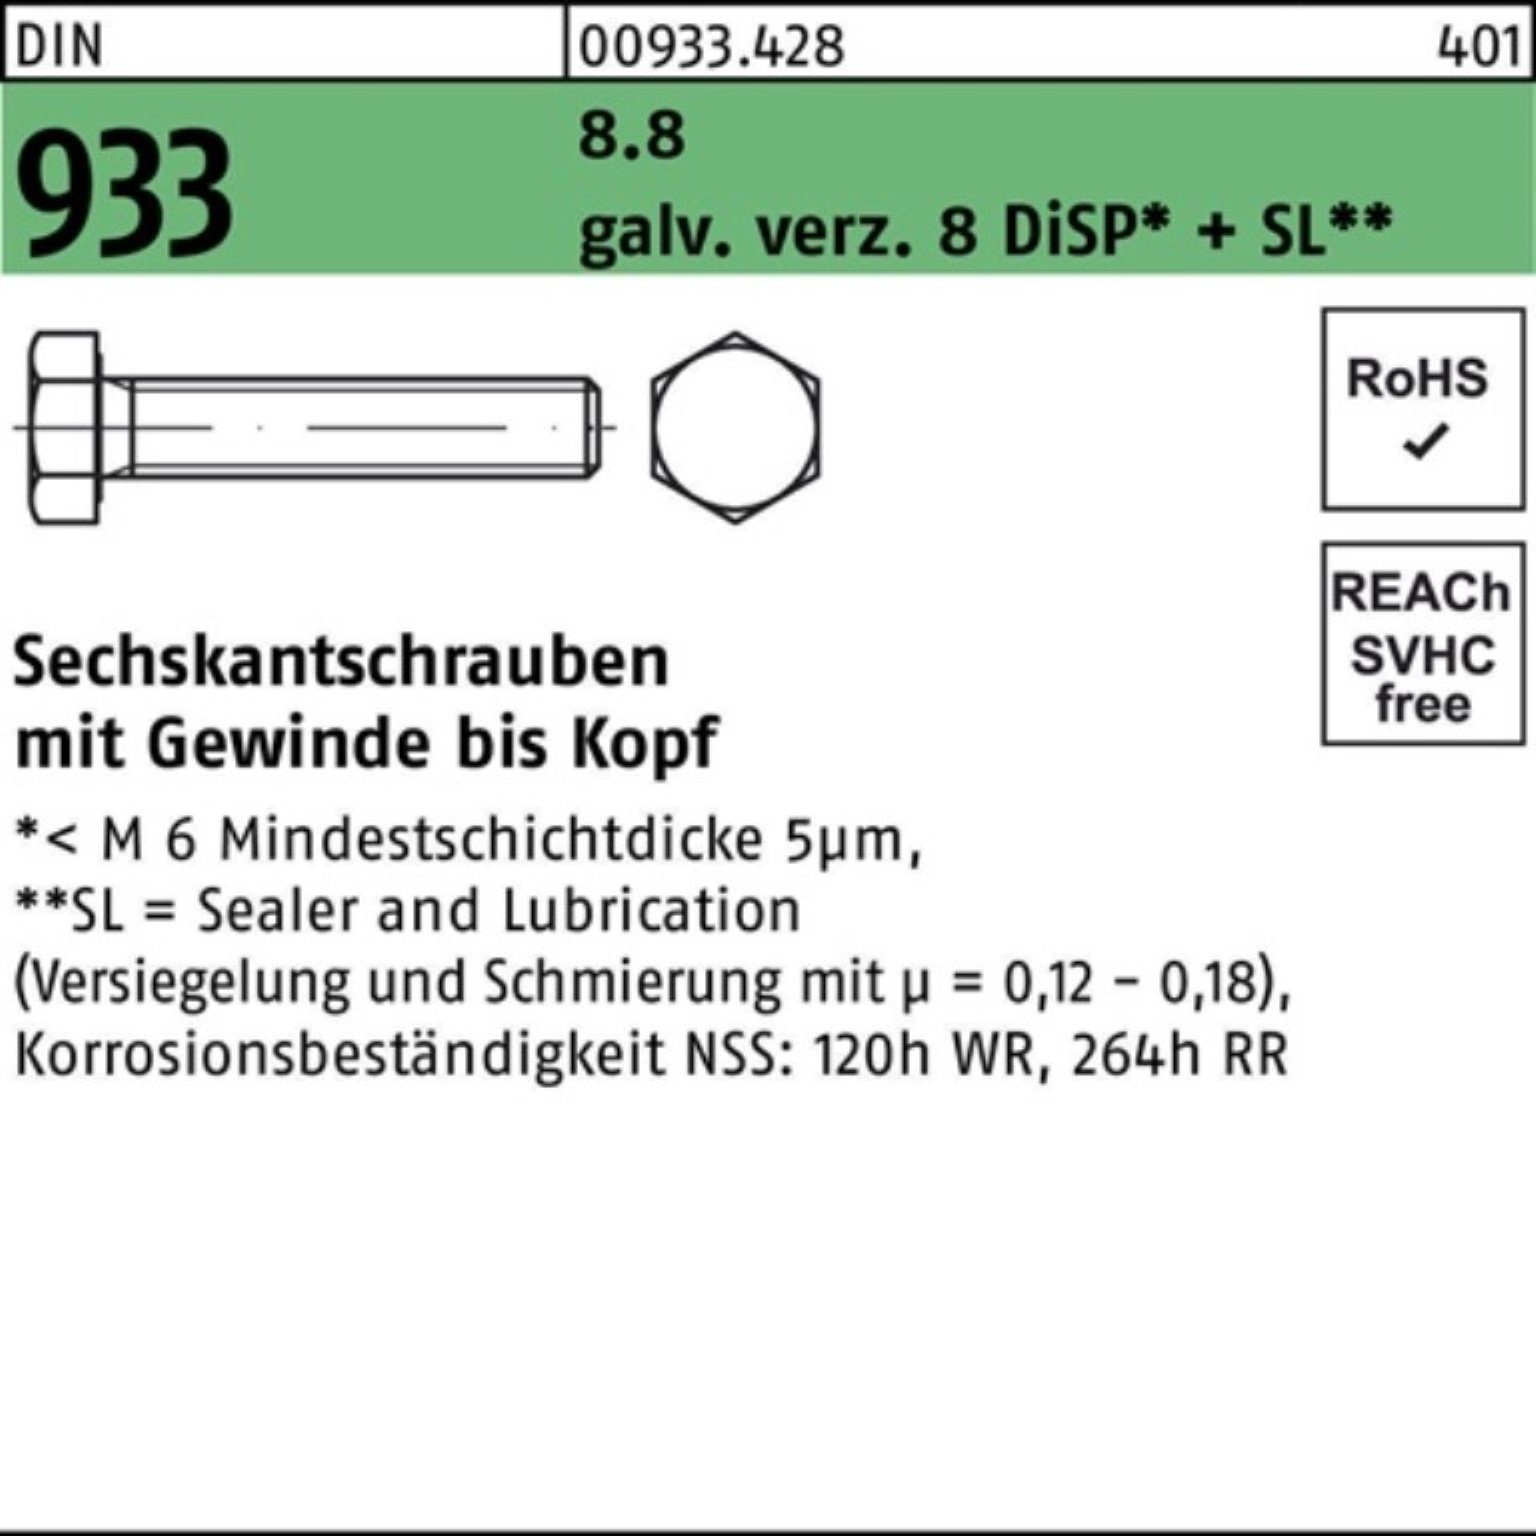 + Sechskantschraube Reyher Sechskantschraube SL M20x 80 gal DiSP Zn 8 933 Pack DIN 100er VG 8.8